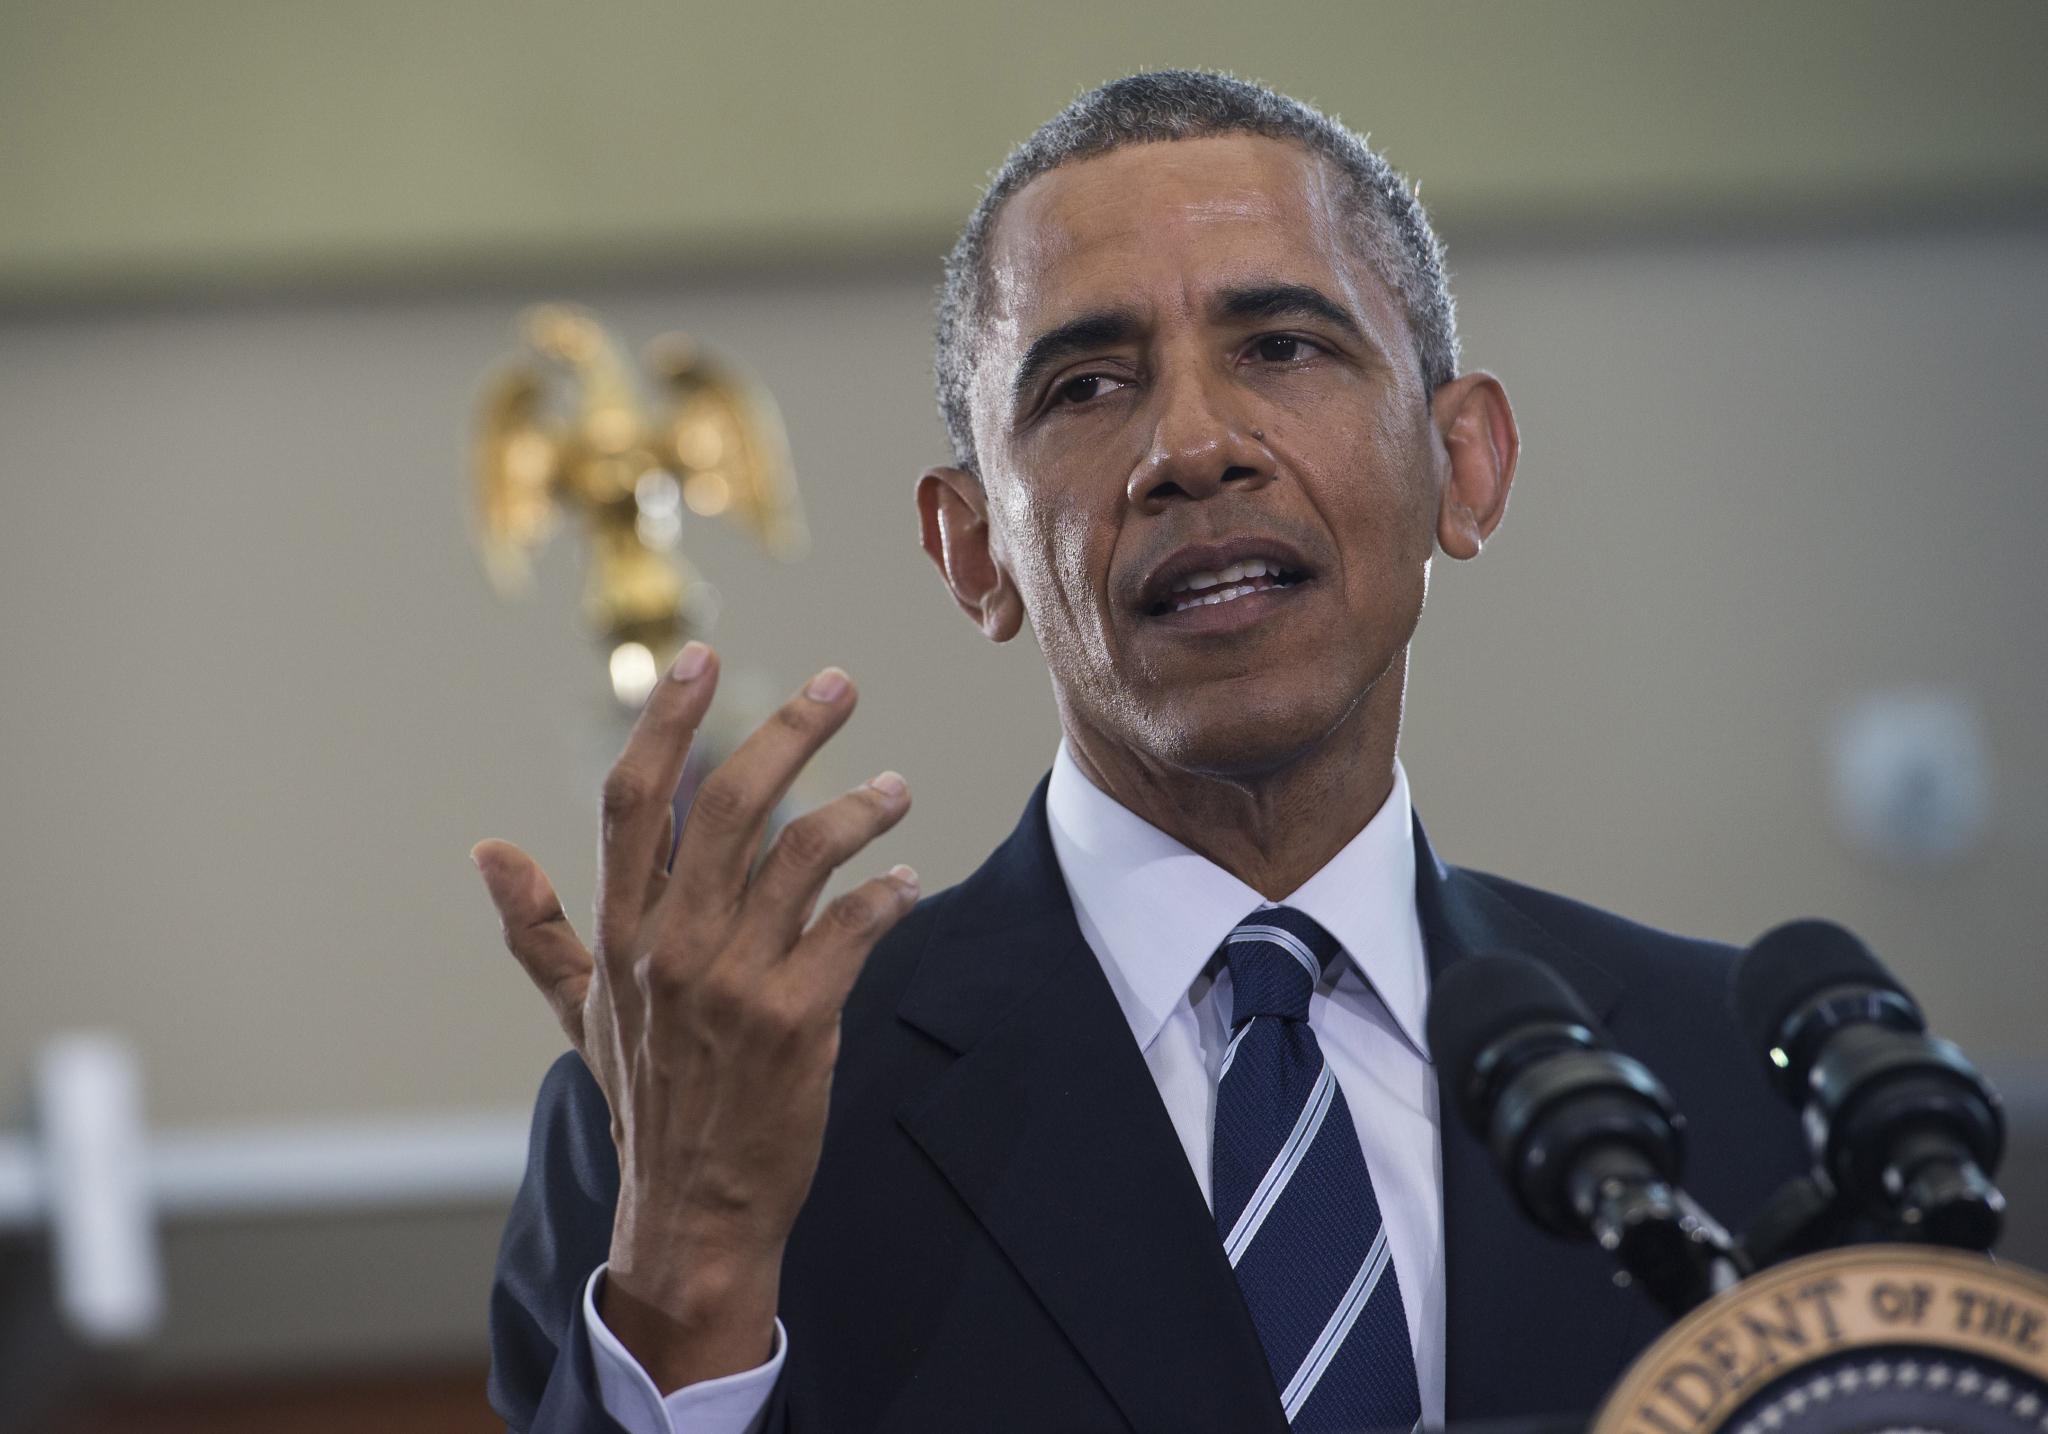 President Obama Speaks on Terrorism Threat: 'America Will Prevail'